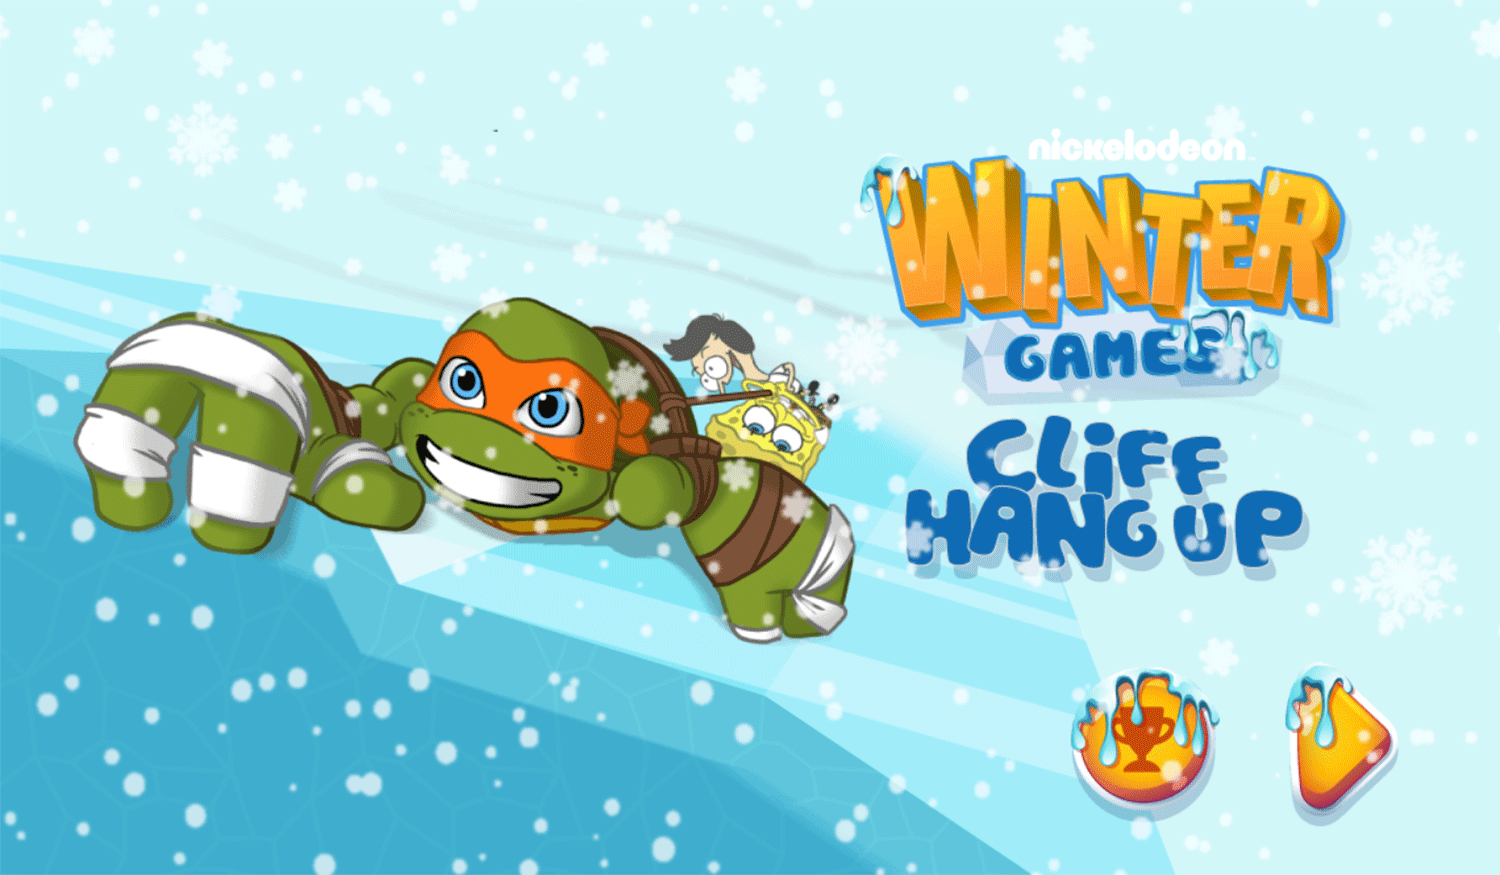 Winter Games Cliff Hang Up Welcome Screen Screenshot.